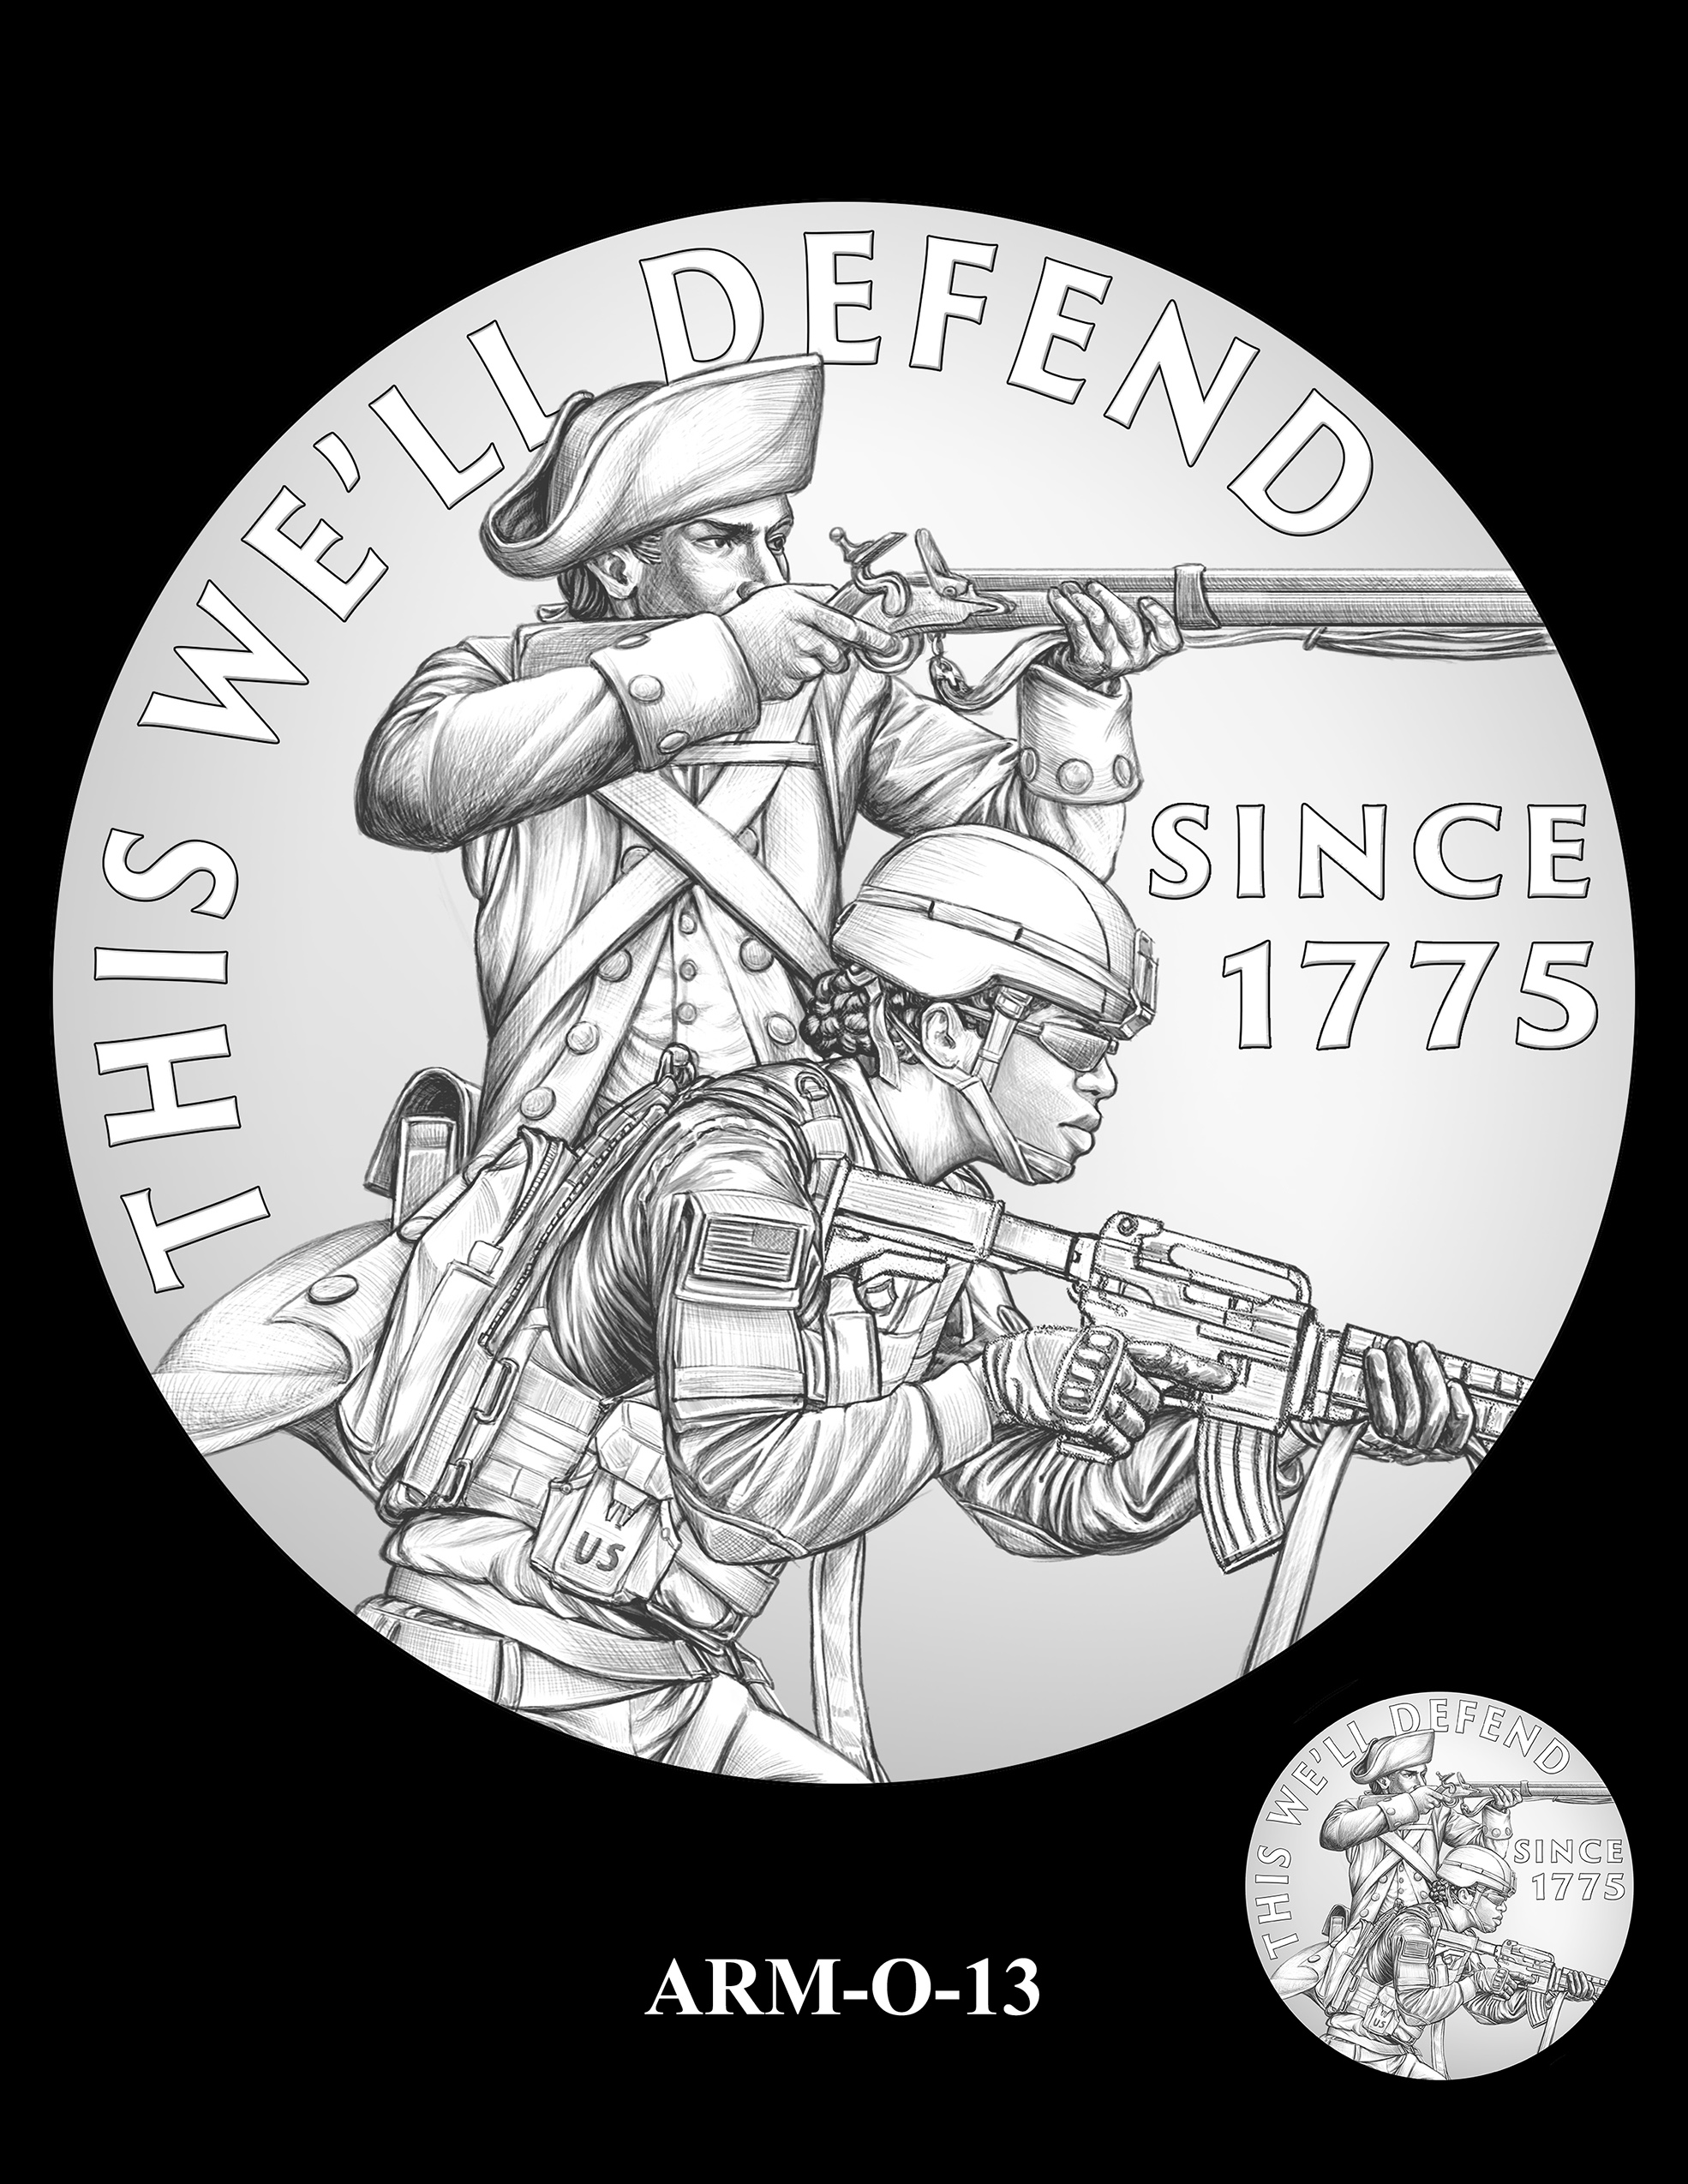 ARM-O-13 -- United States Army Silver Medal